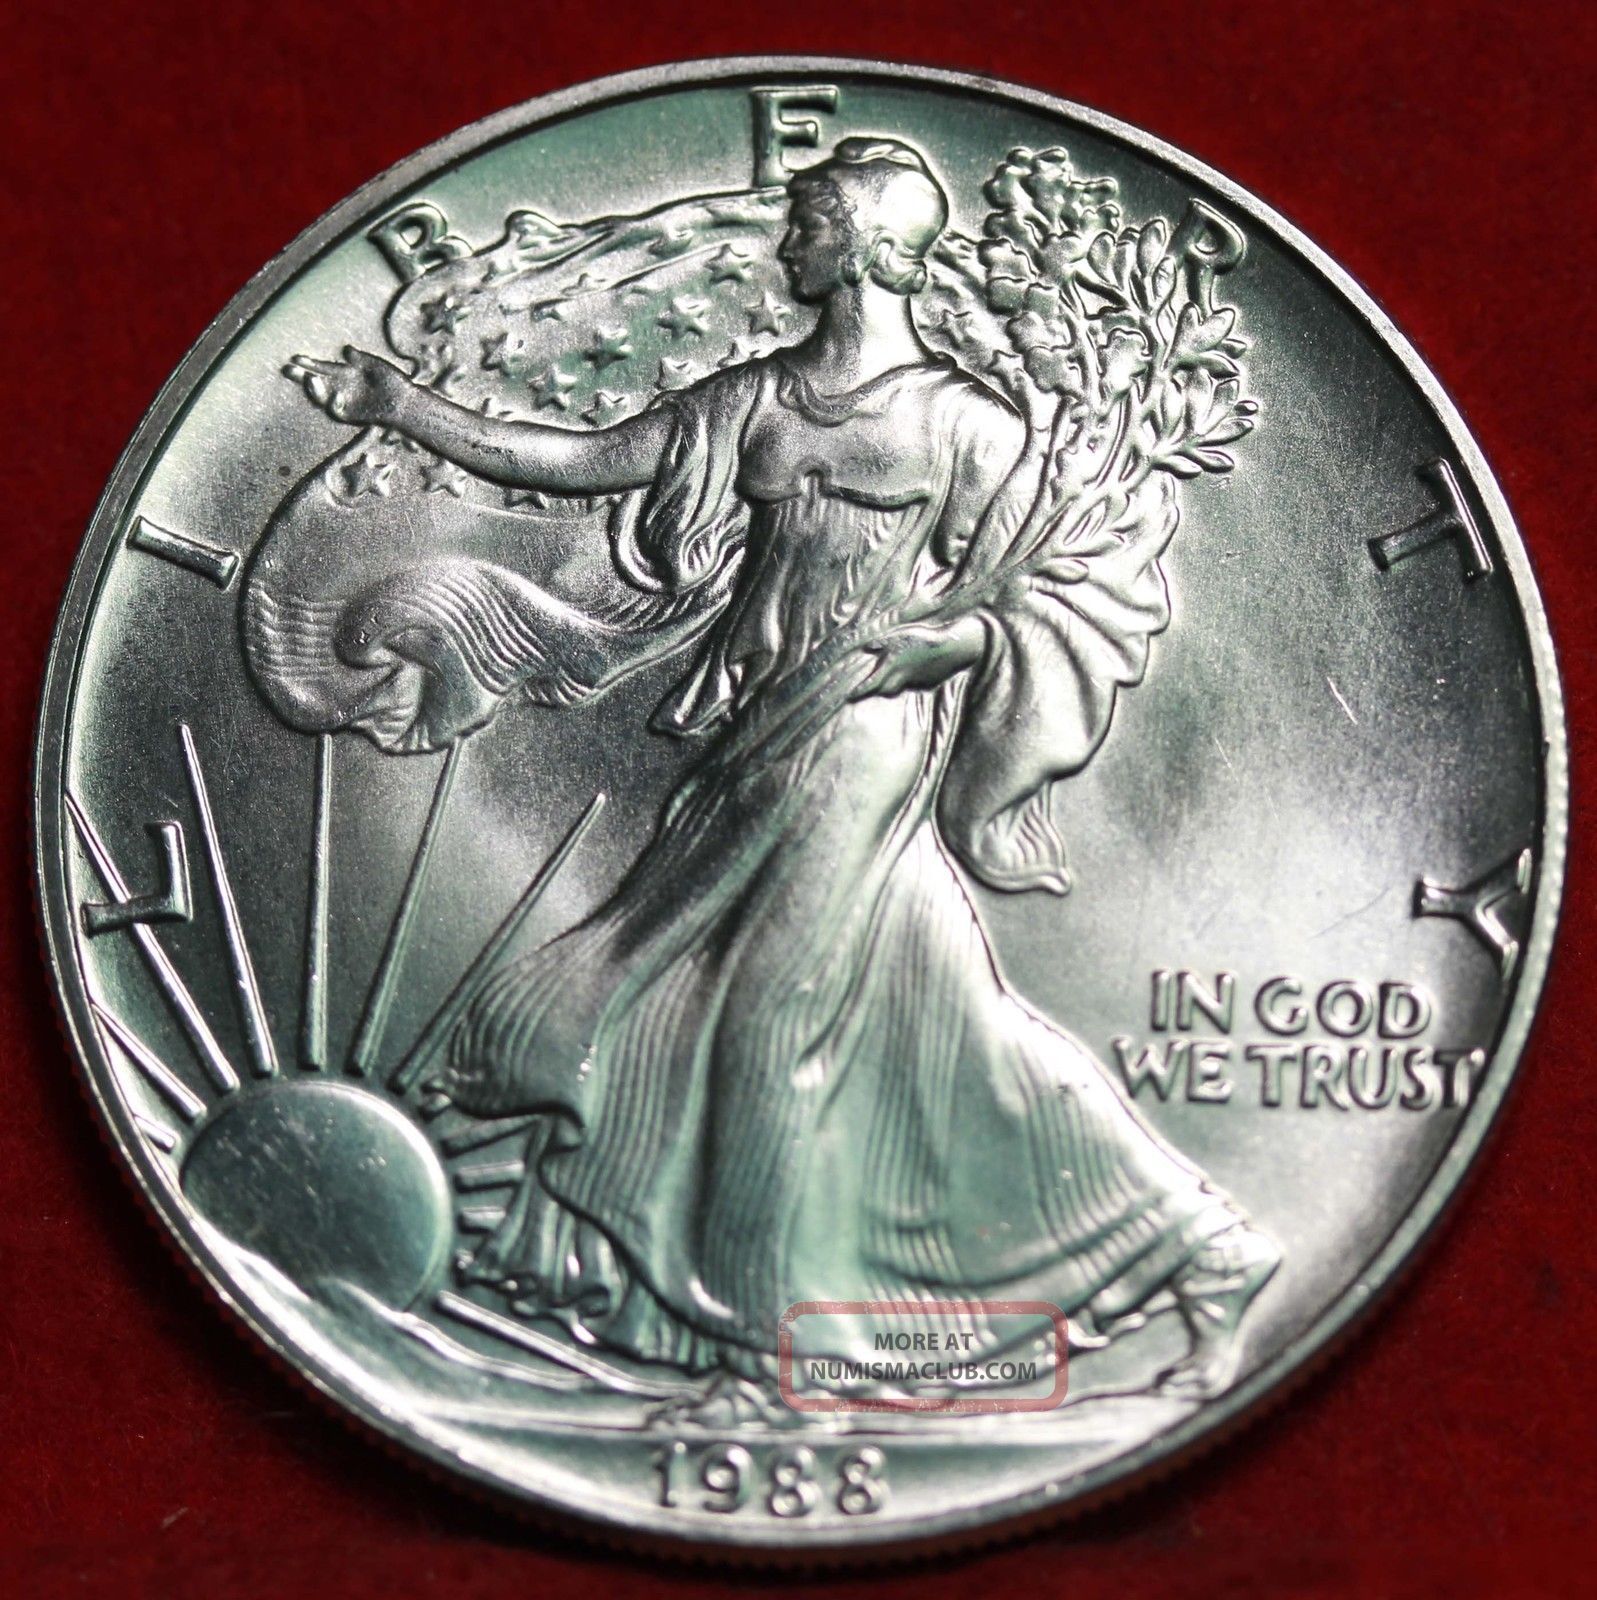 Uncirculated 1988 American Eagle Silver Dollar